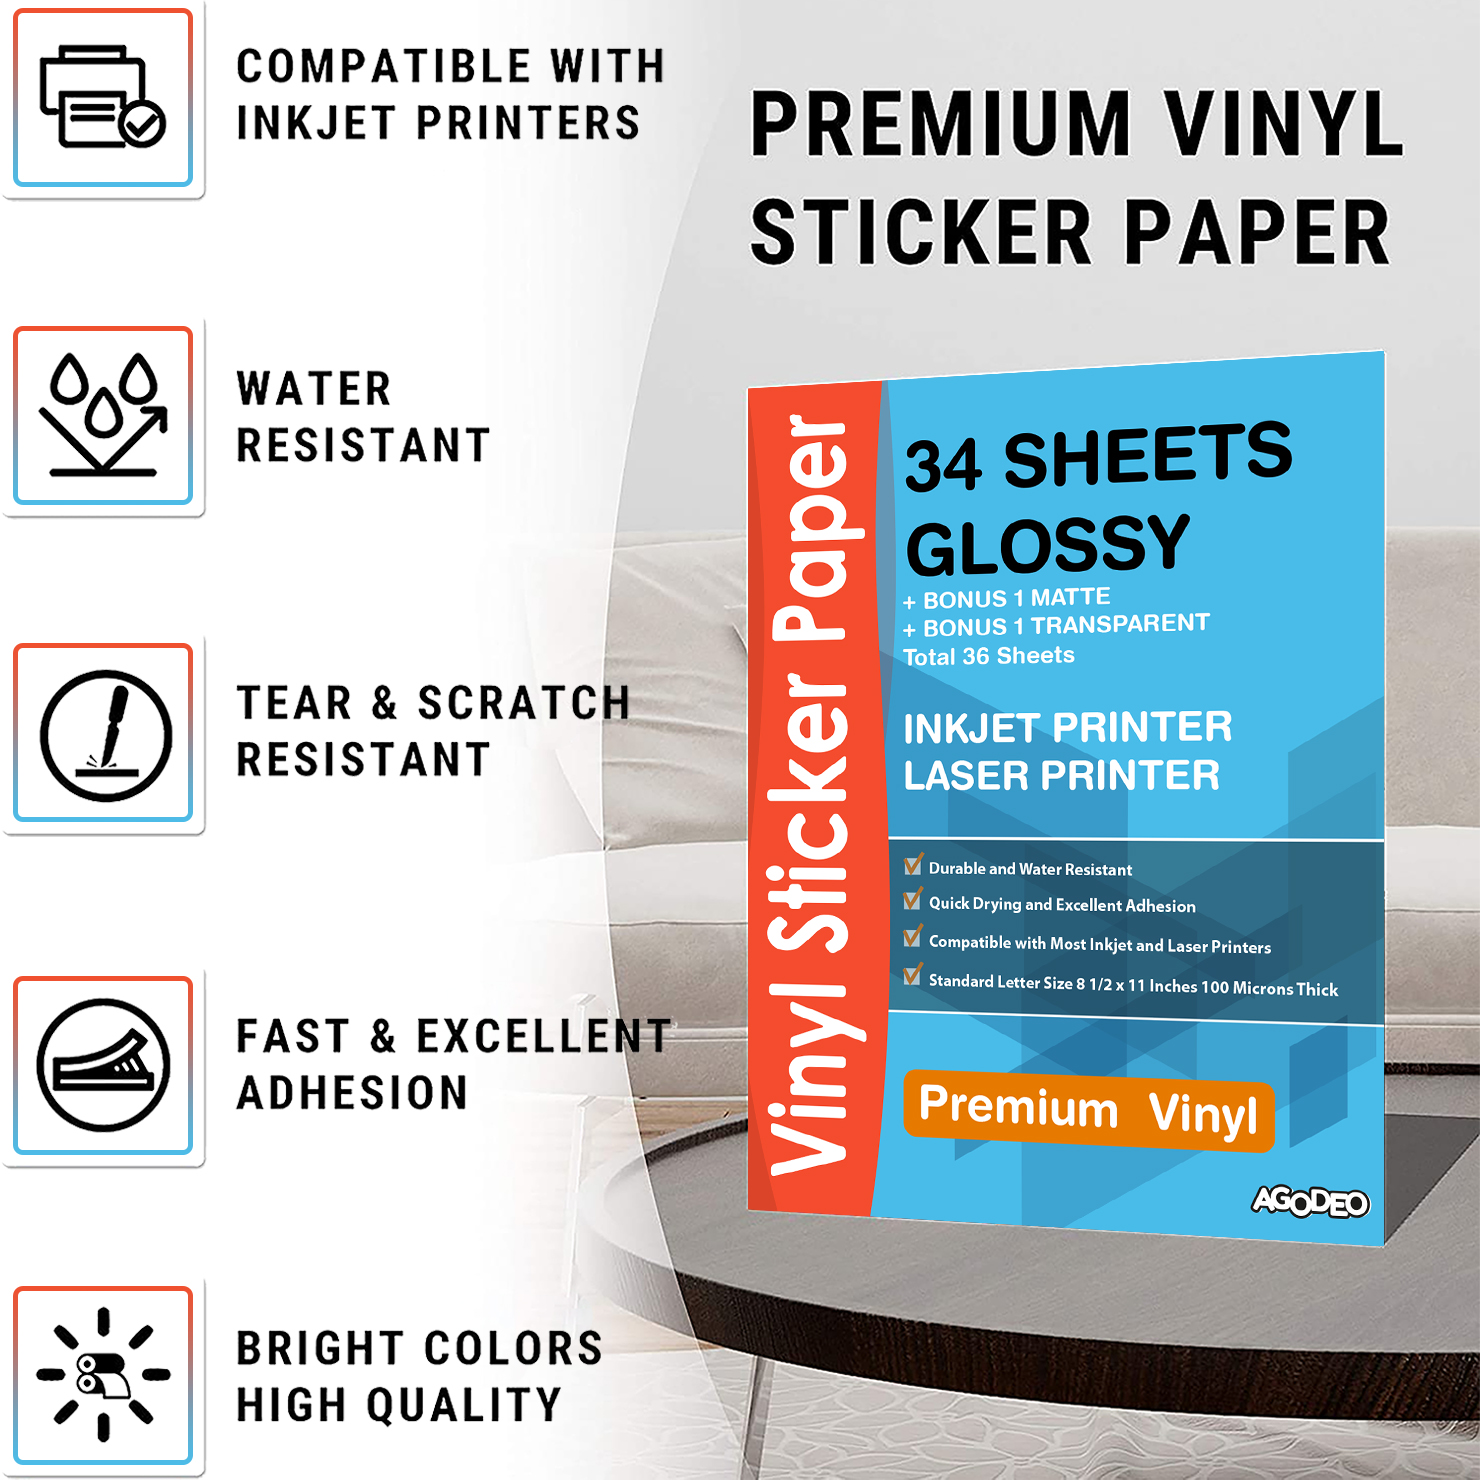 Glossy Vinyl Sticker Paper - AgoDeo